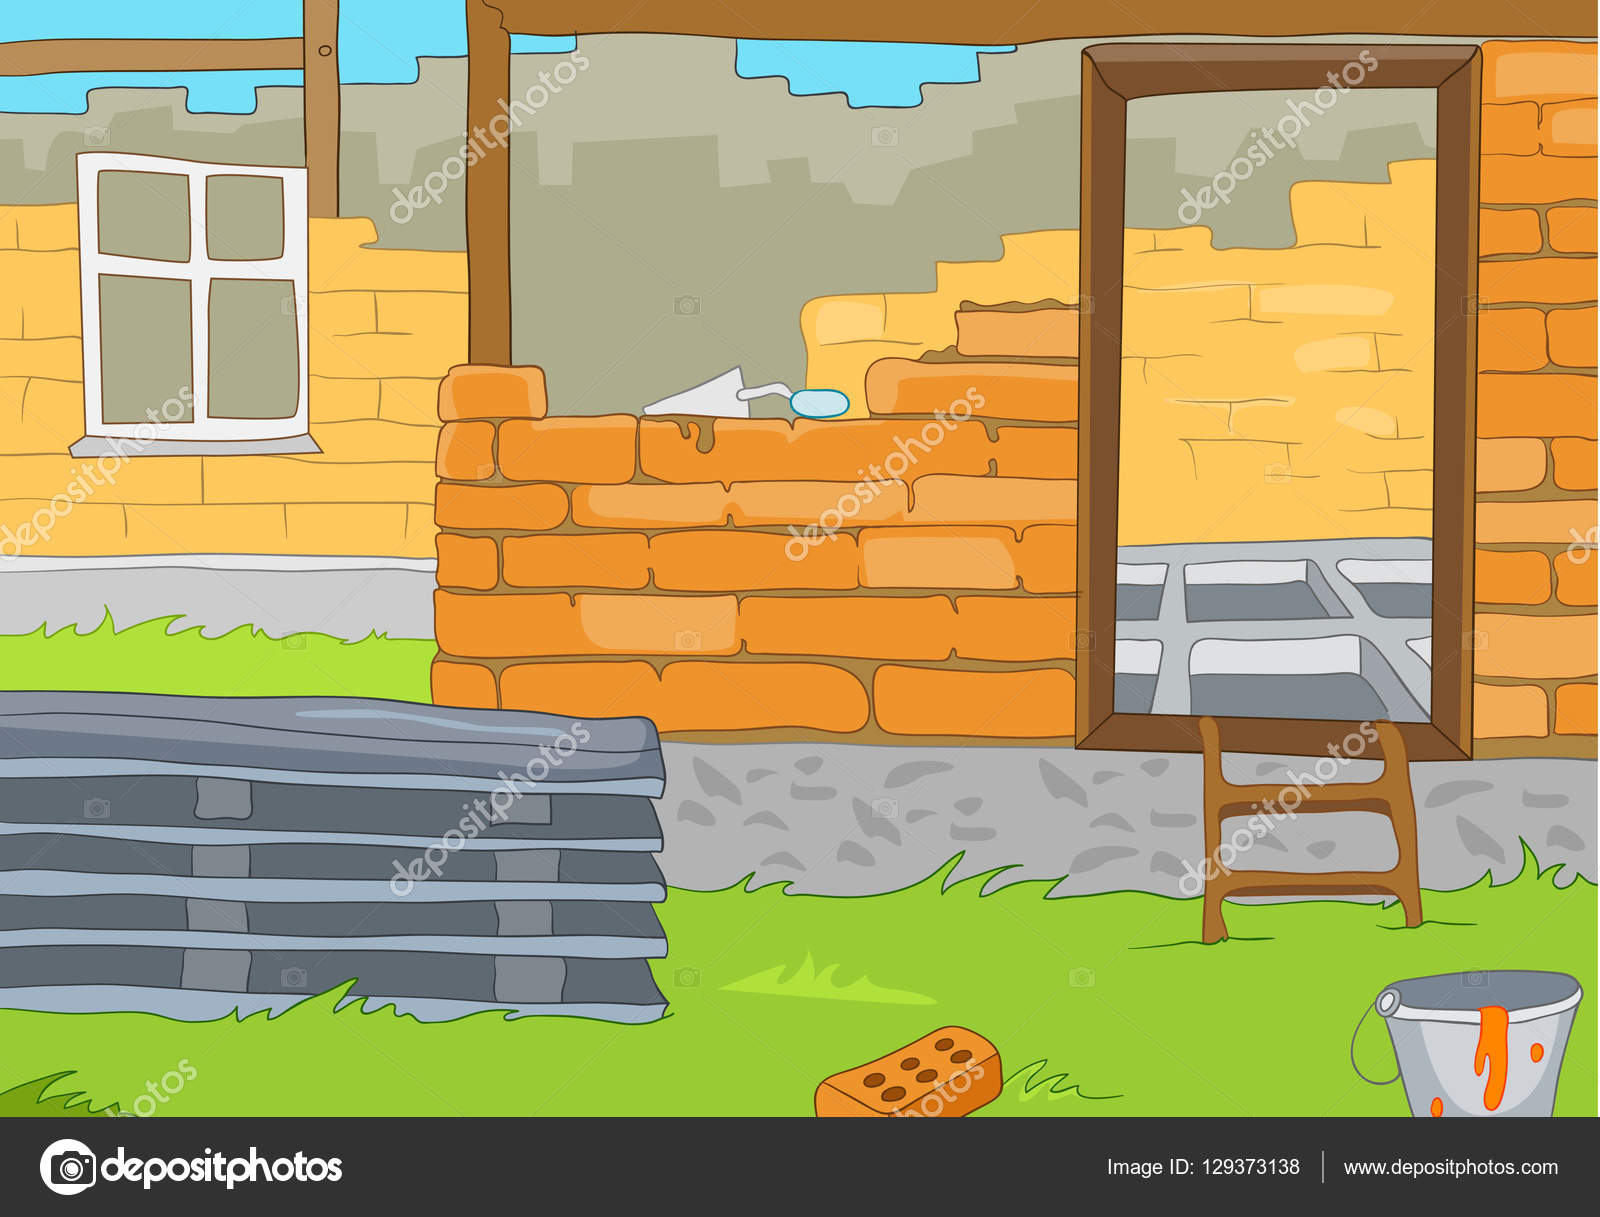 Cartoon background of rural house construction. Stock Photo by  ©VisualGeneration 129373138